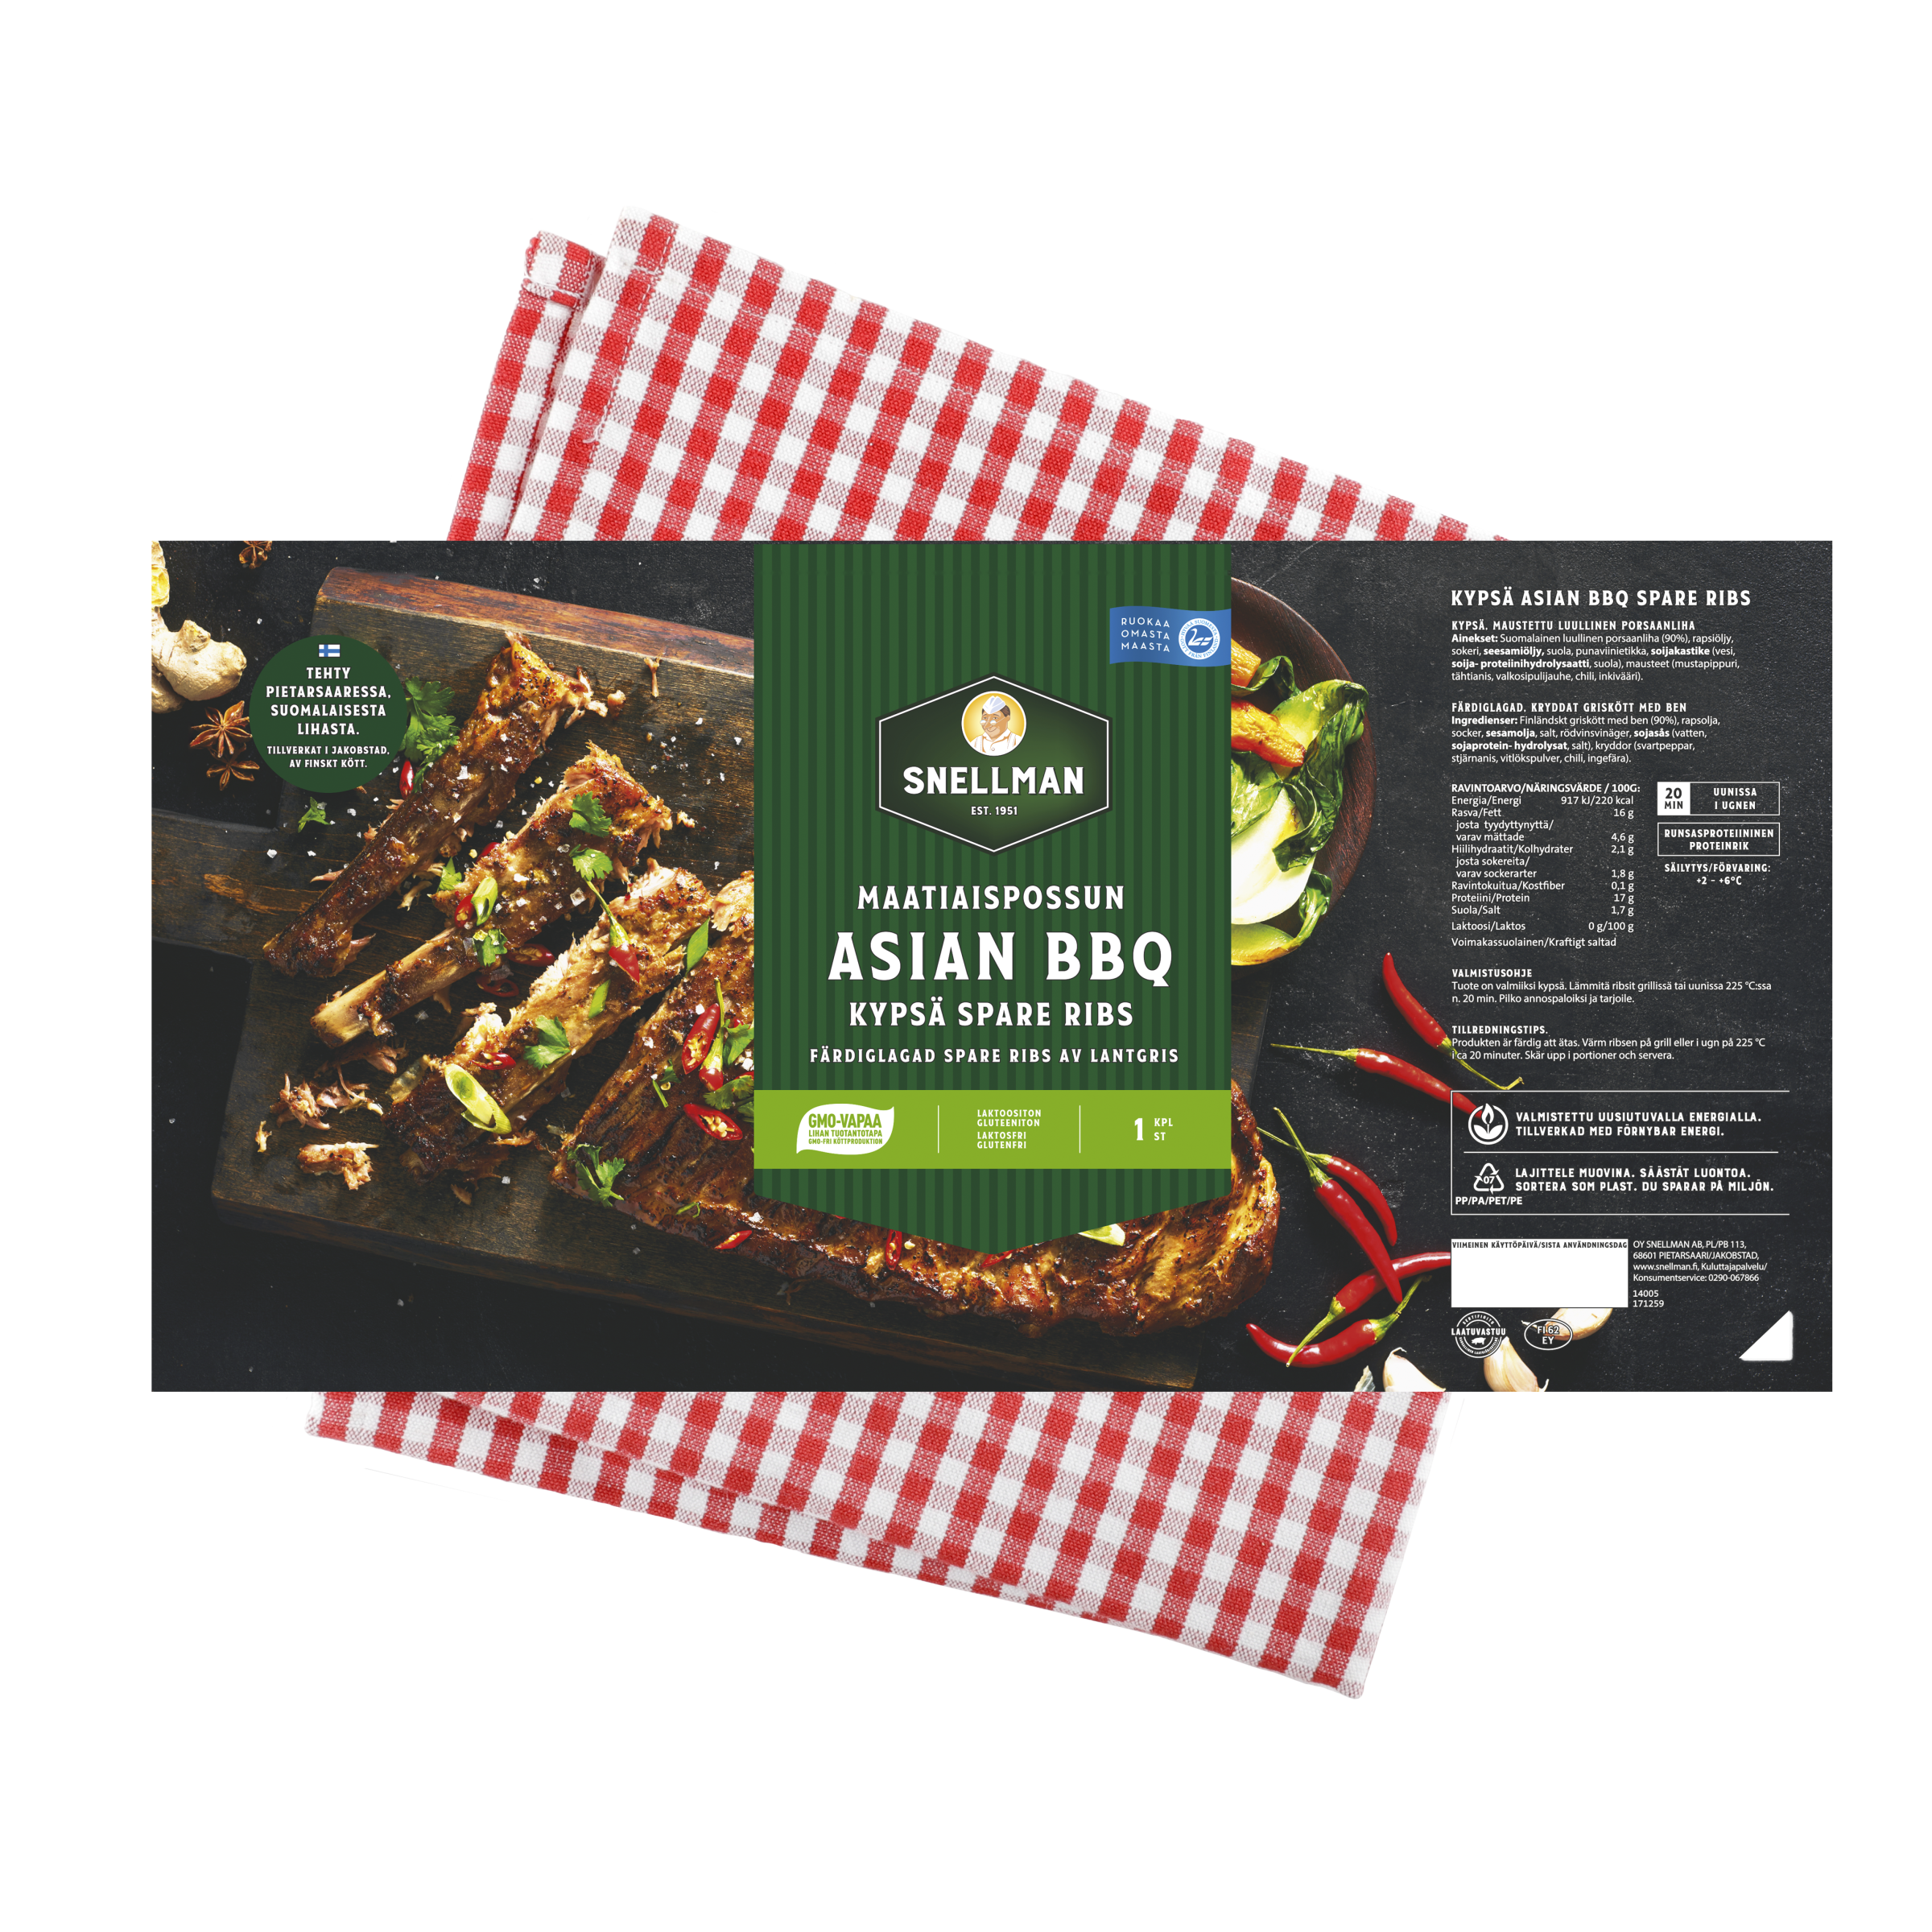 Maatiaispossun kypsä spare ribs Asian BBQ n. 700 g 1